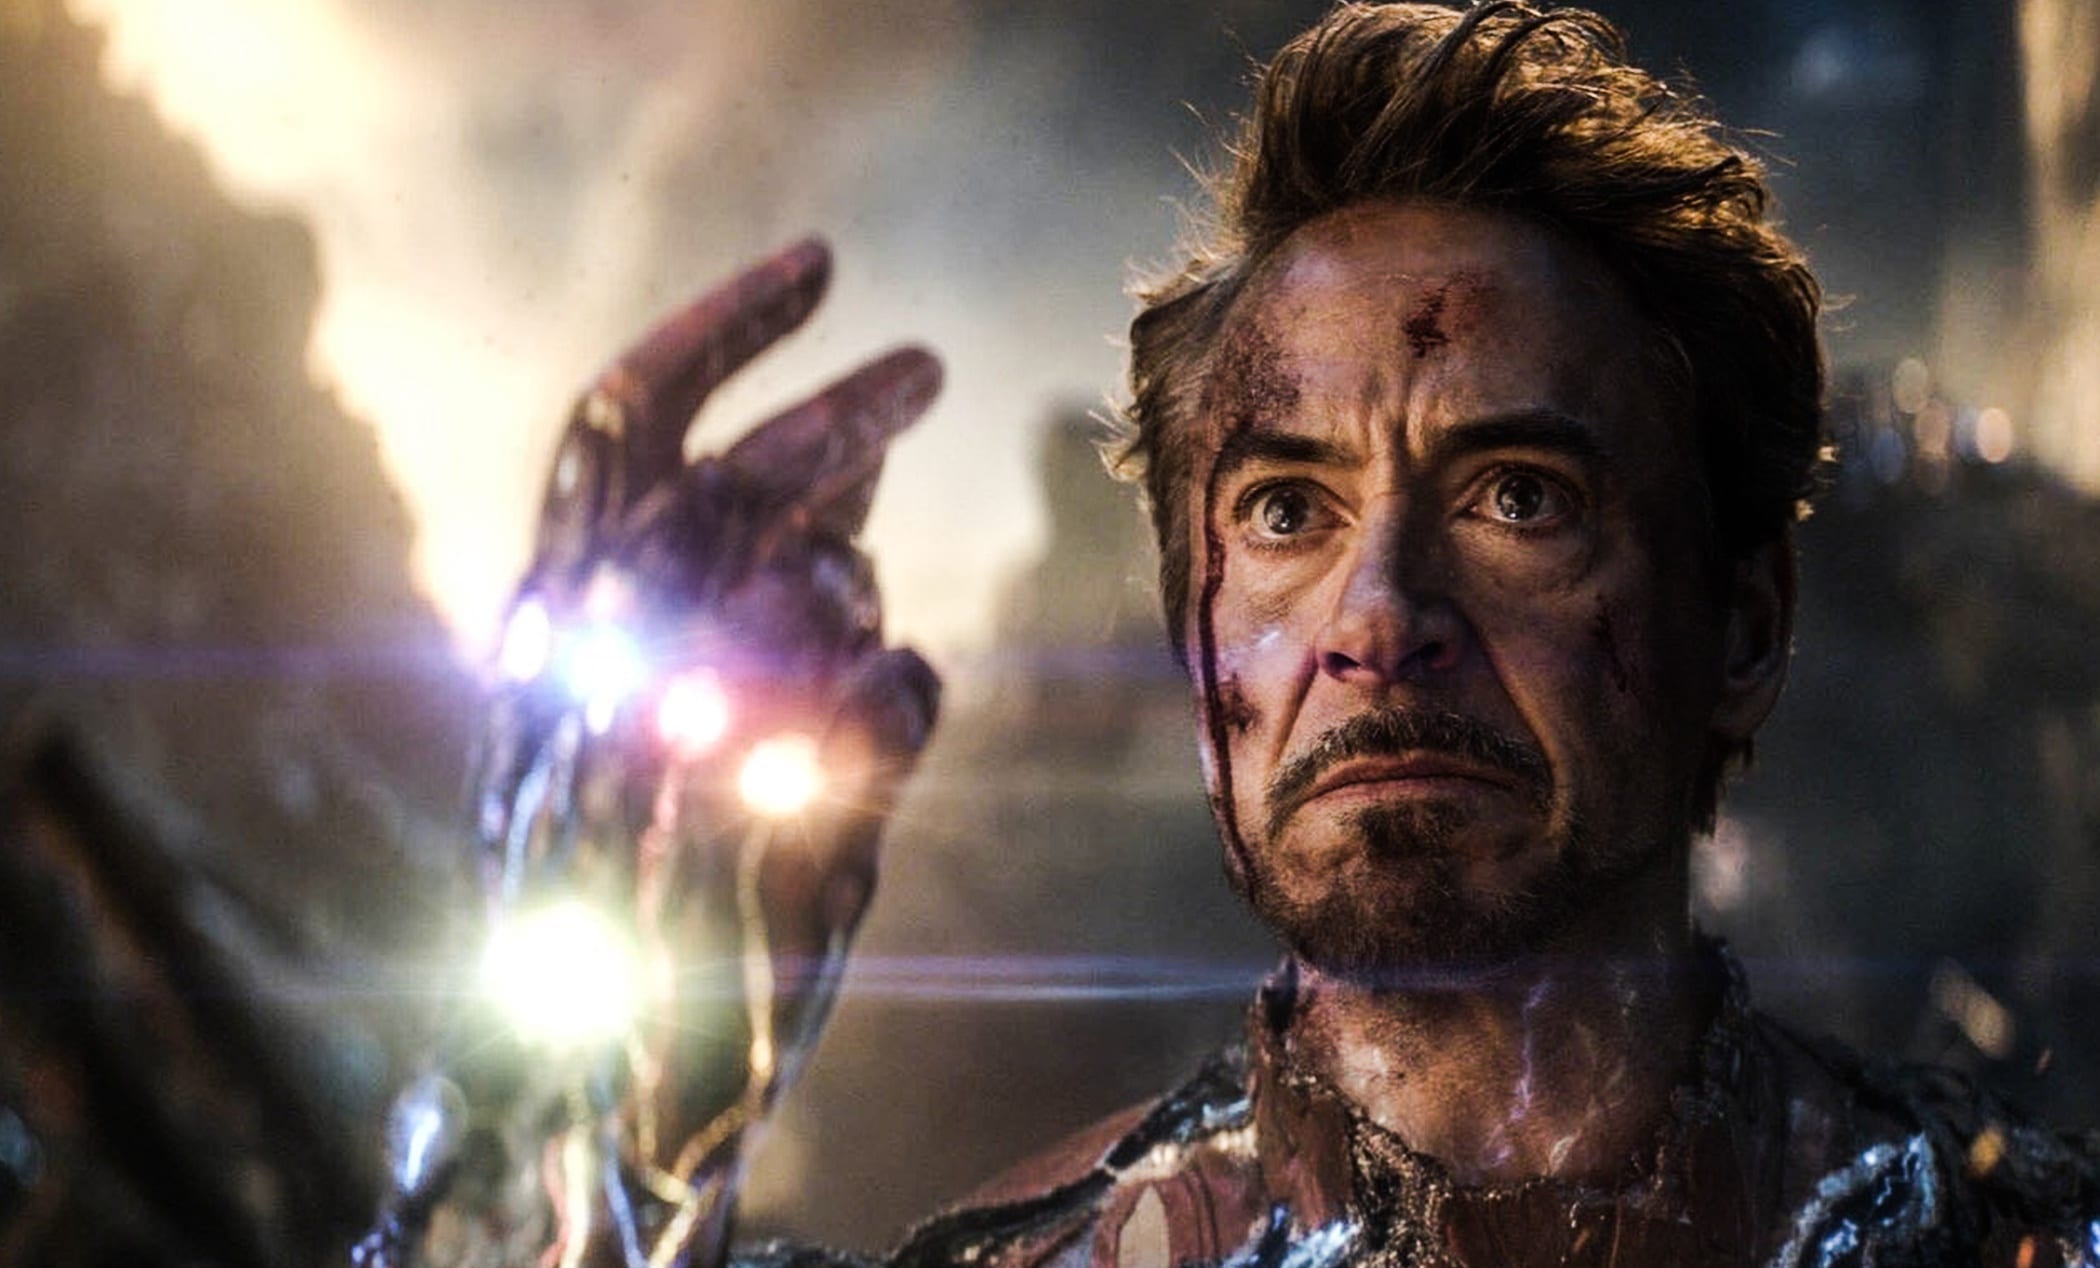 Robert Downey Jr. potrebbe tornare a interpretare Tony Stark / Iron Man nel prossimo Avengers